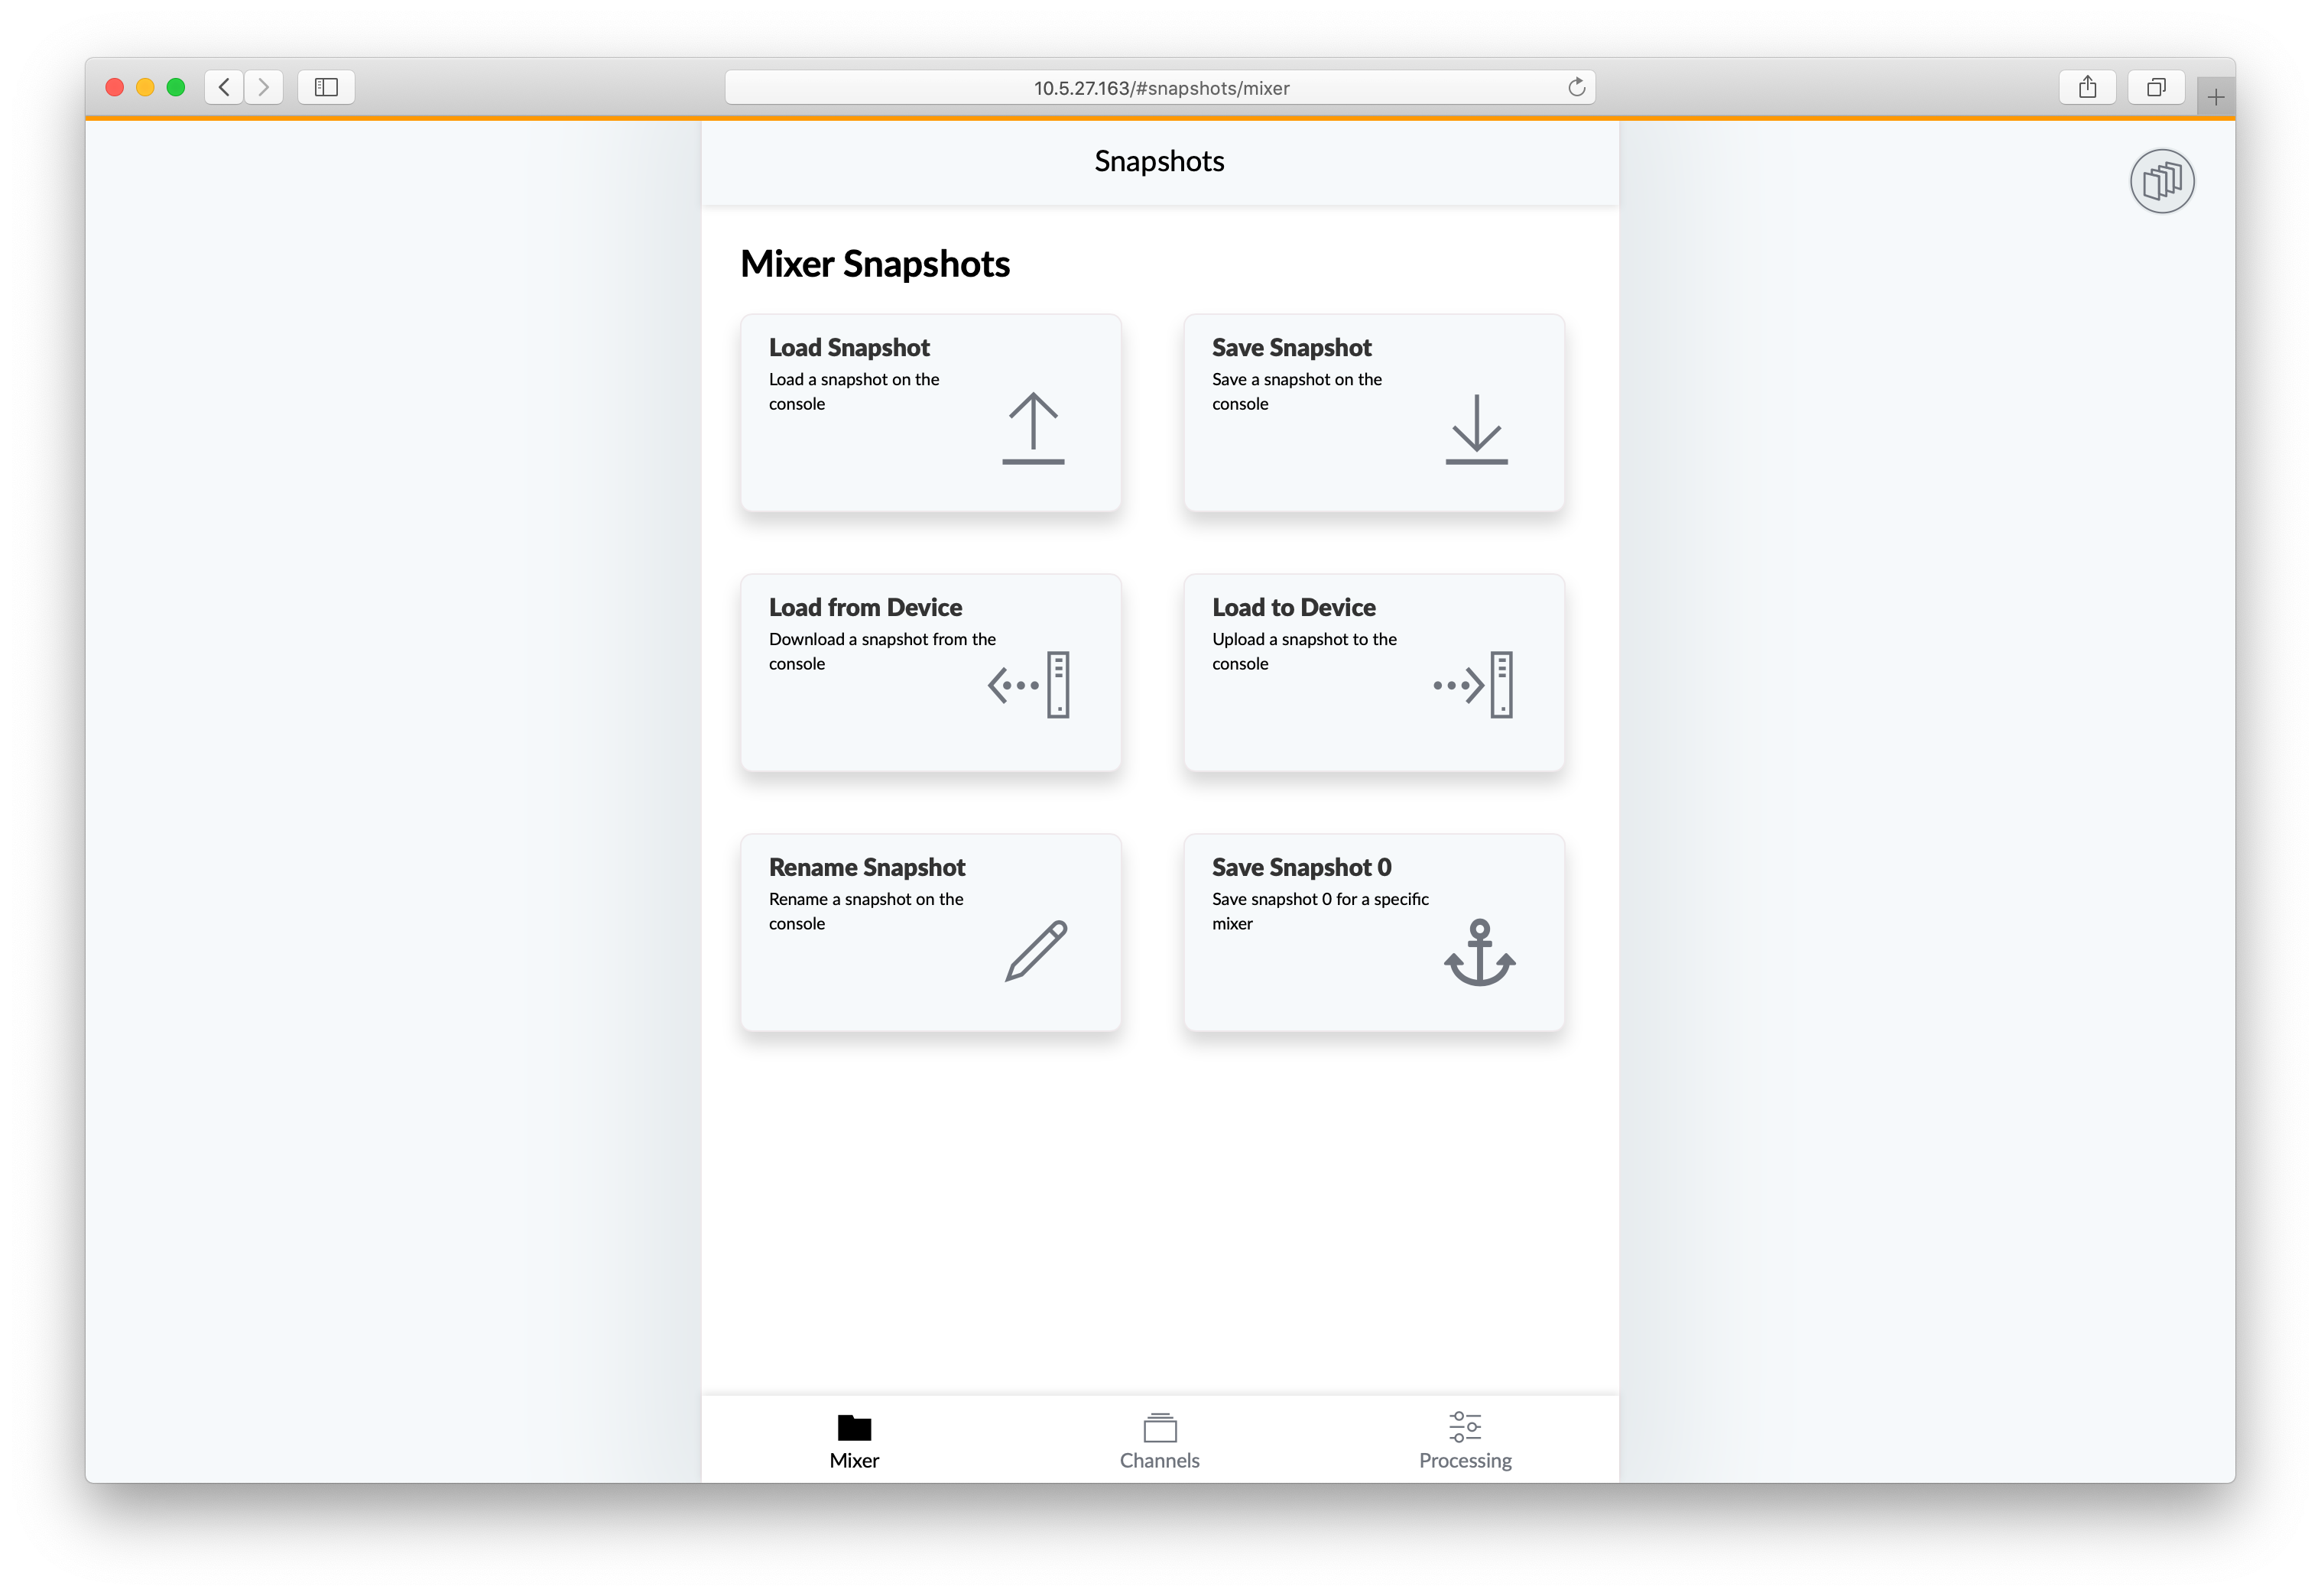 Standard Snapshots App interface